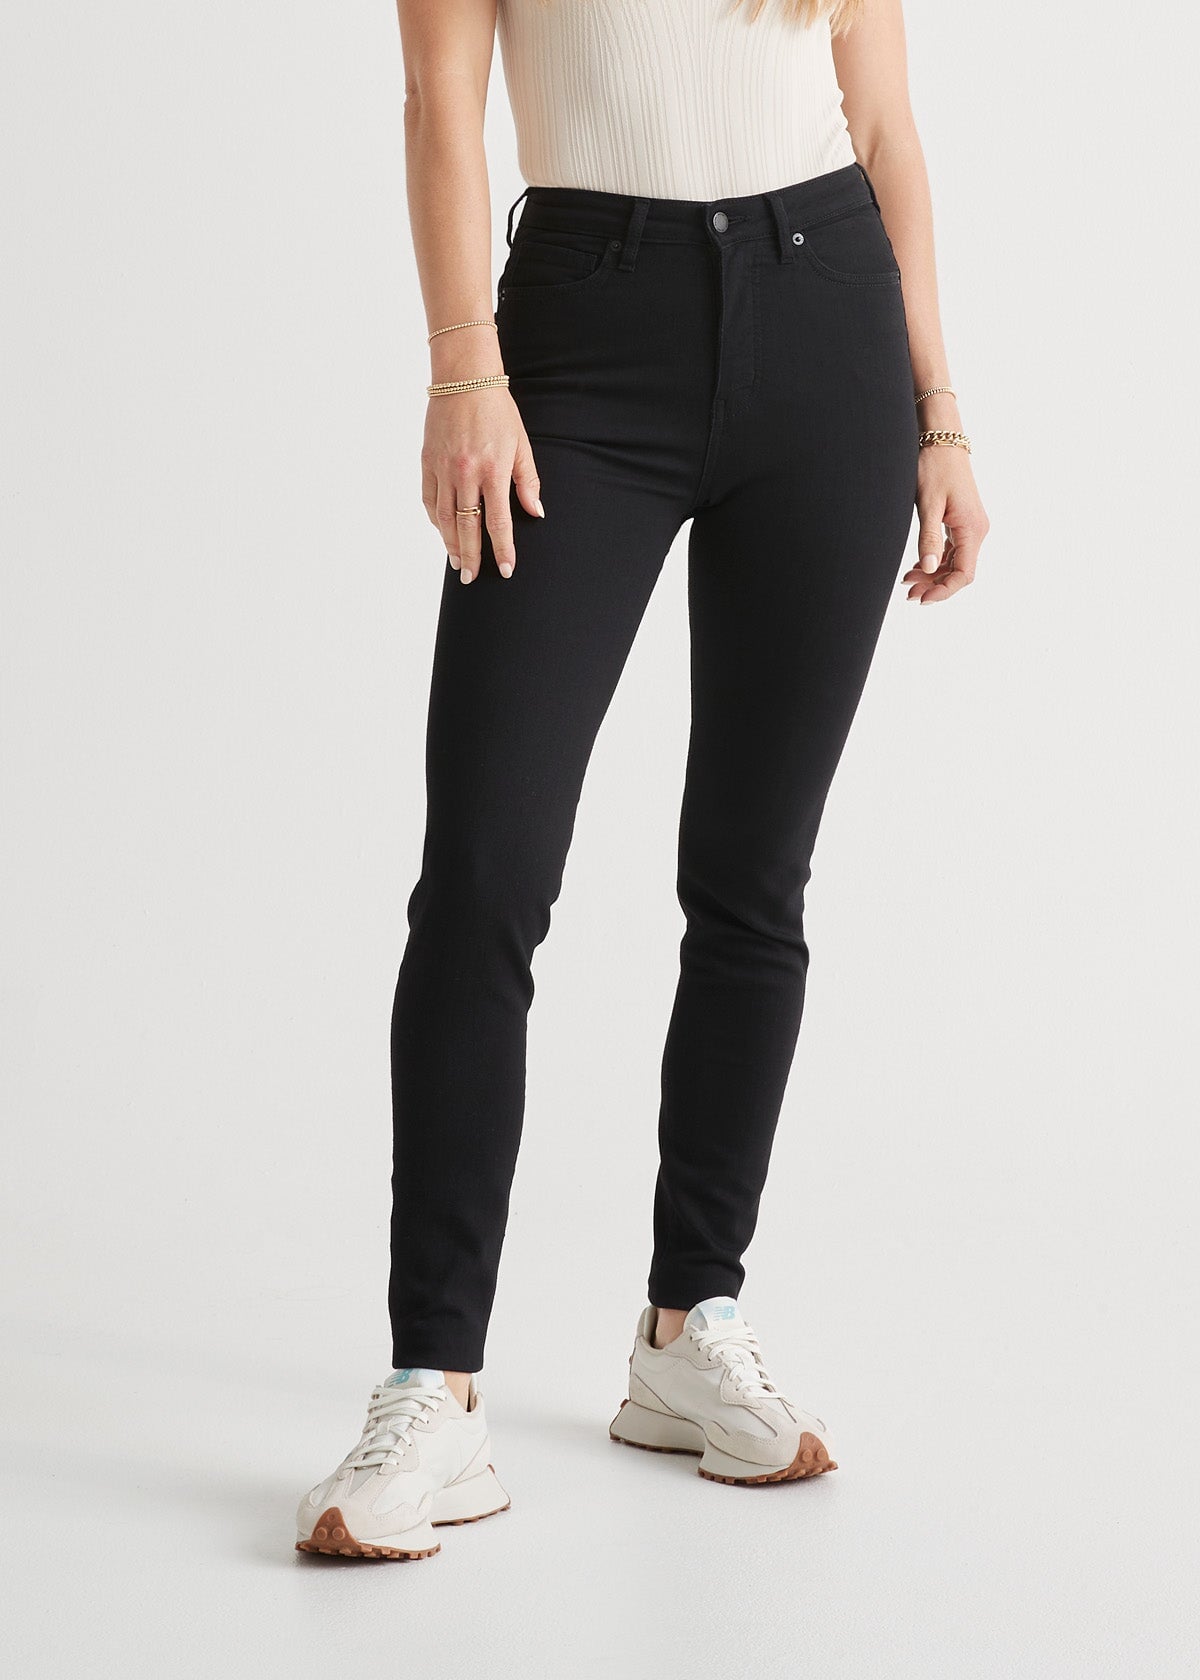 DISCERNMENT】Highlight Dark Black Denim Jeans